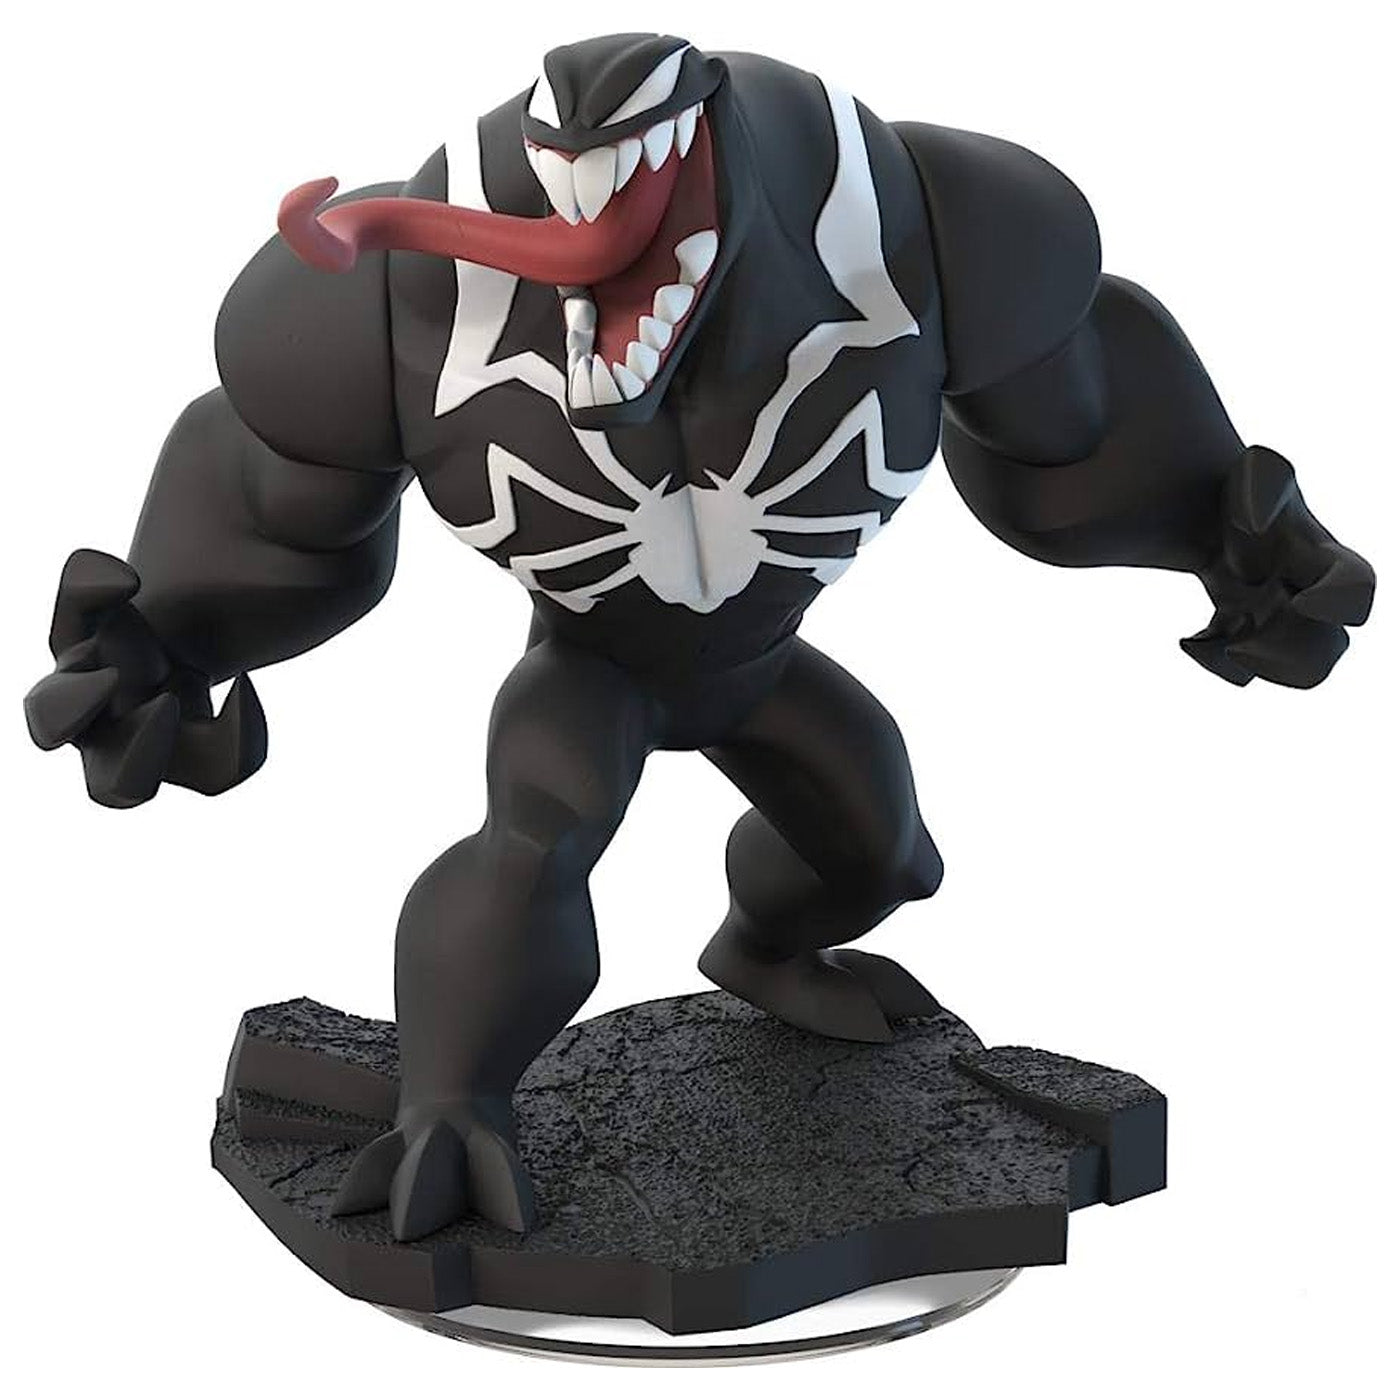 Disney Infinity 2.0 Character: Venom